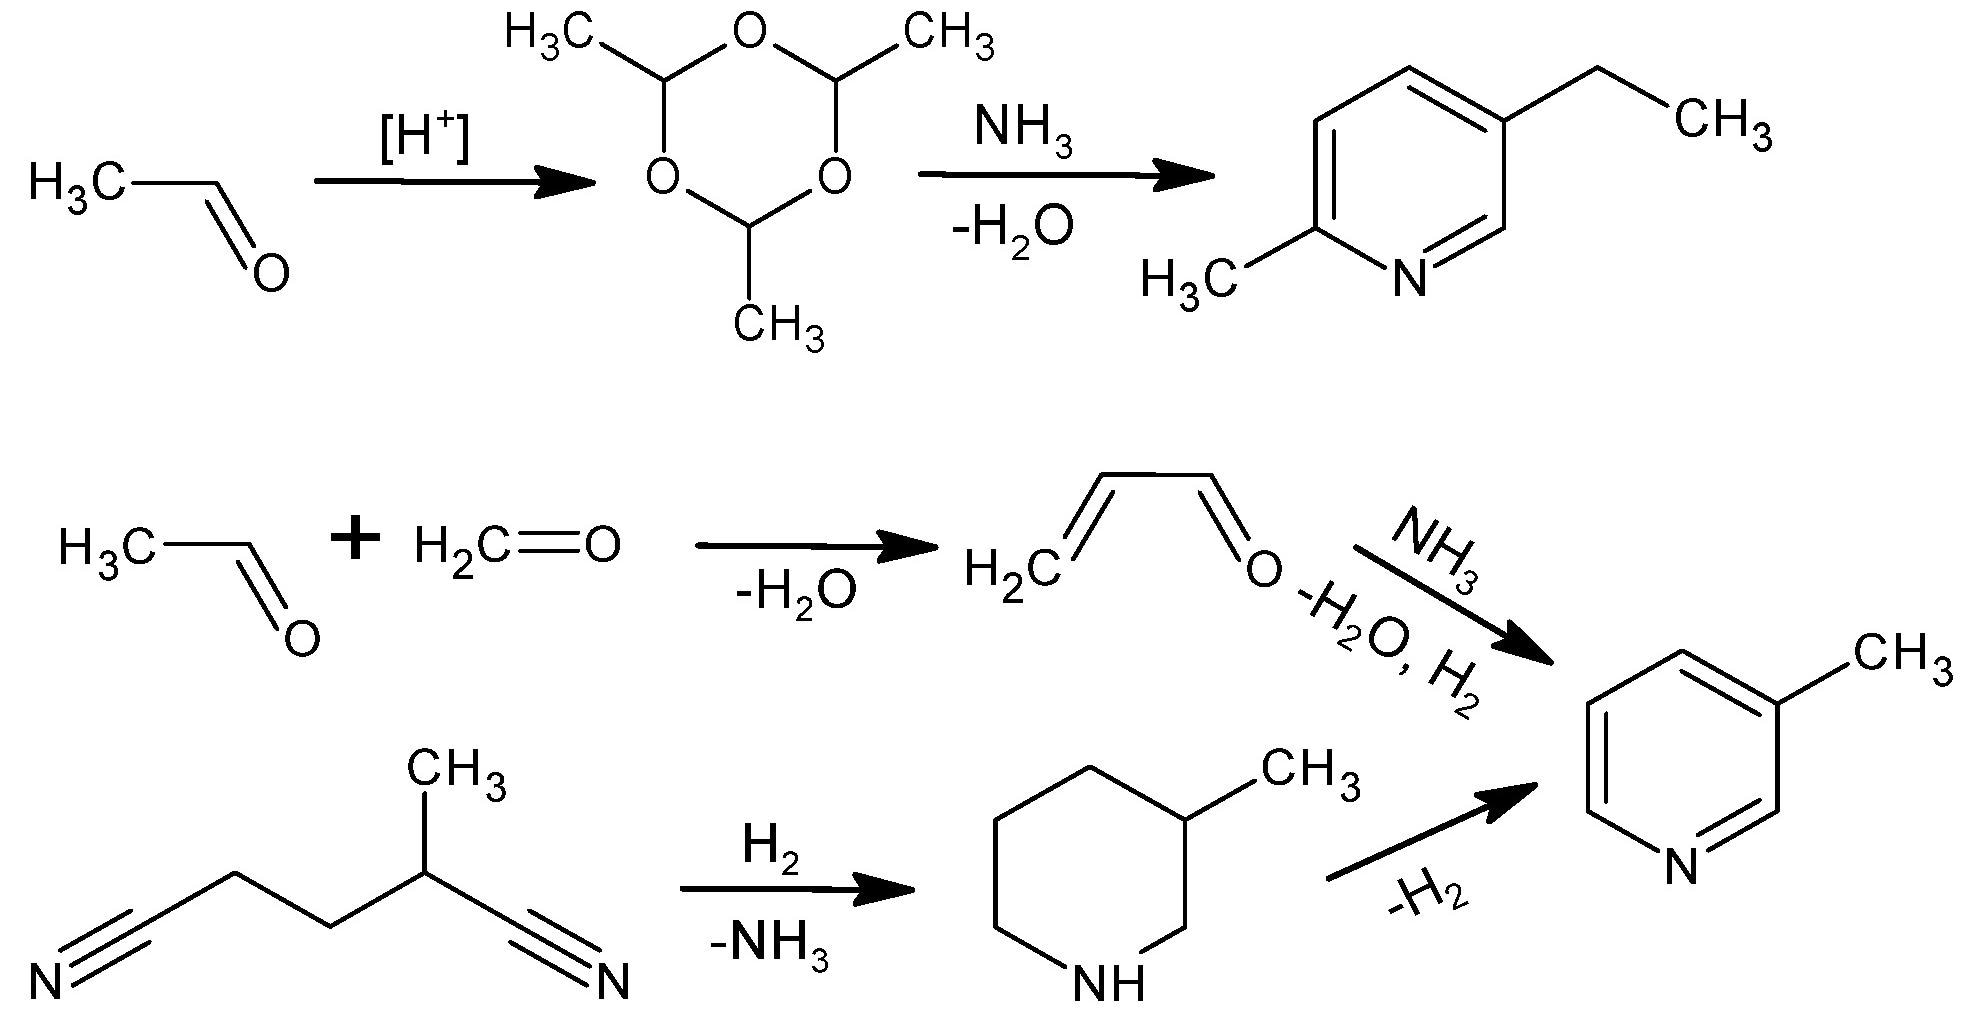 Industrial methods to produce 5-ethyl-2-methylpyridine or 3-methylpyridine.